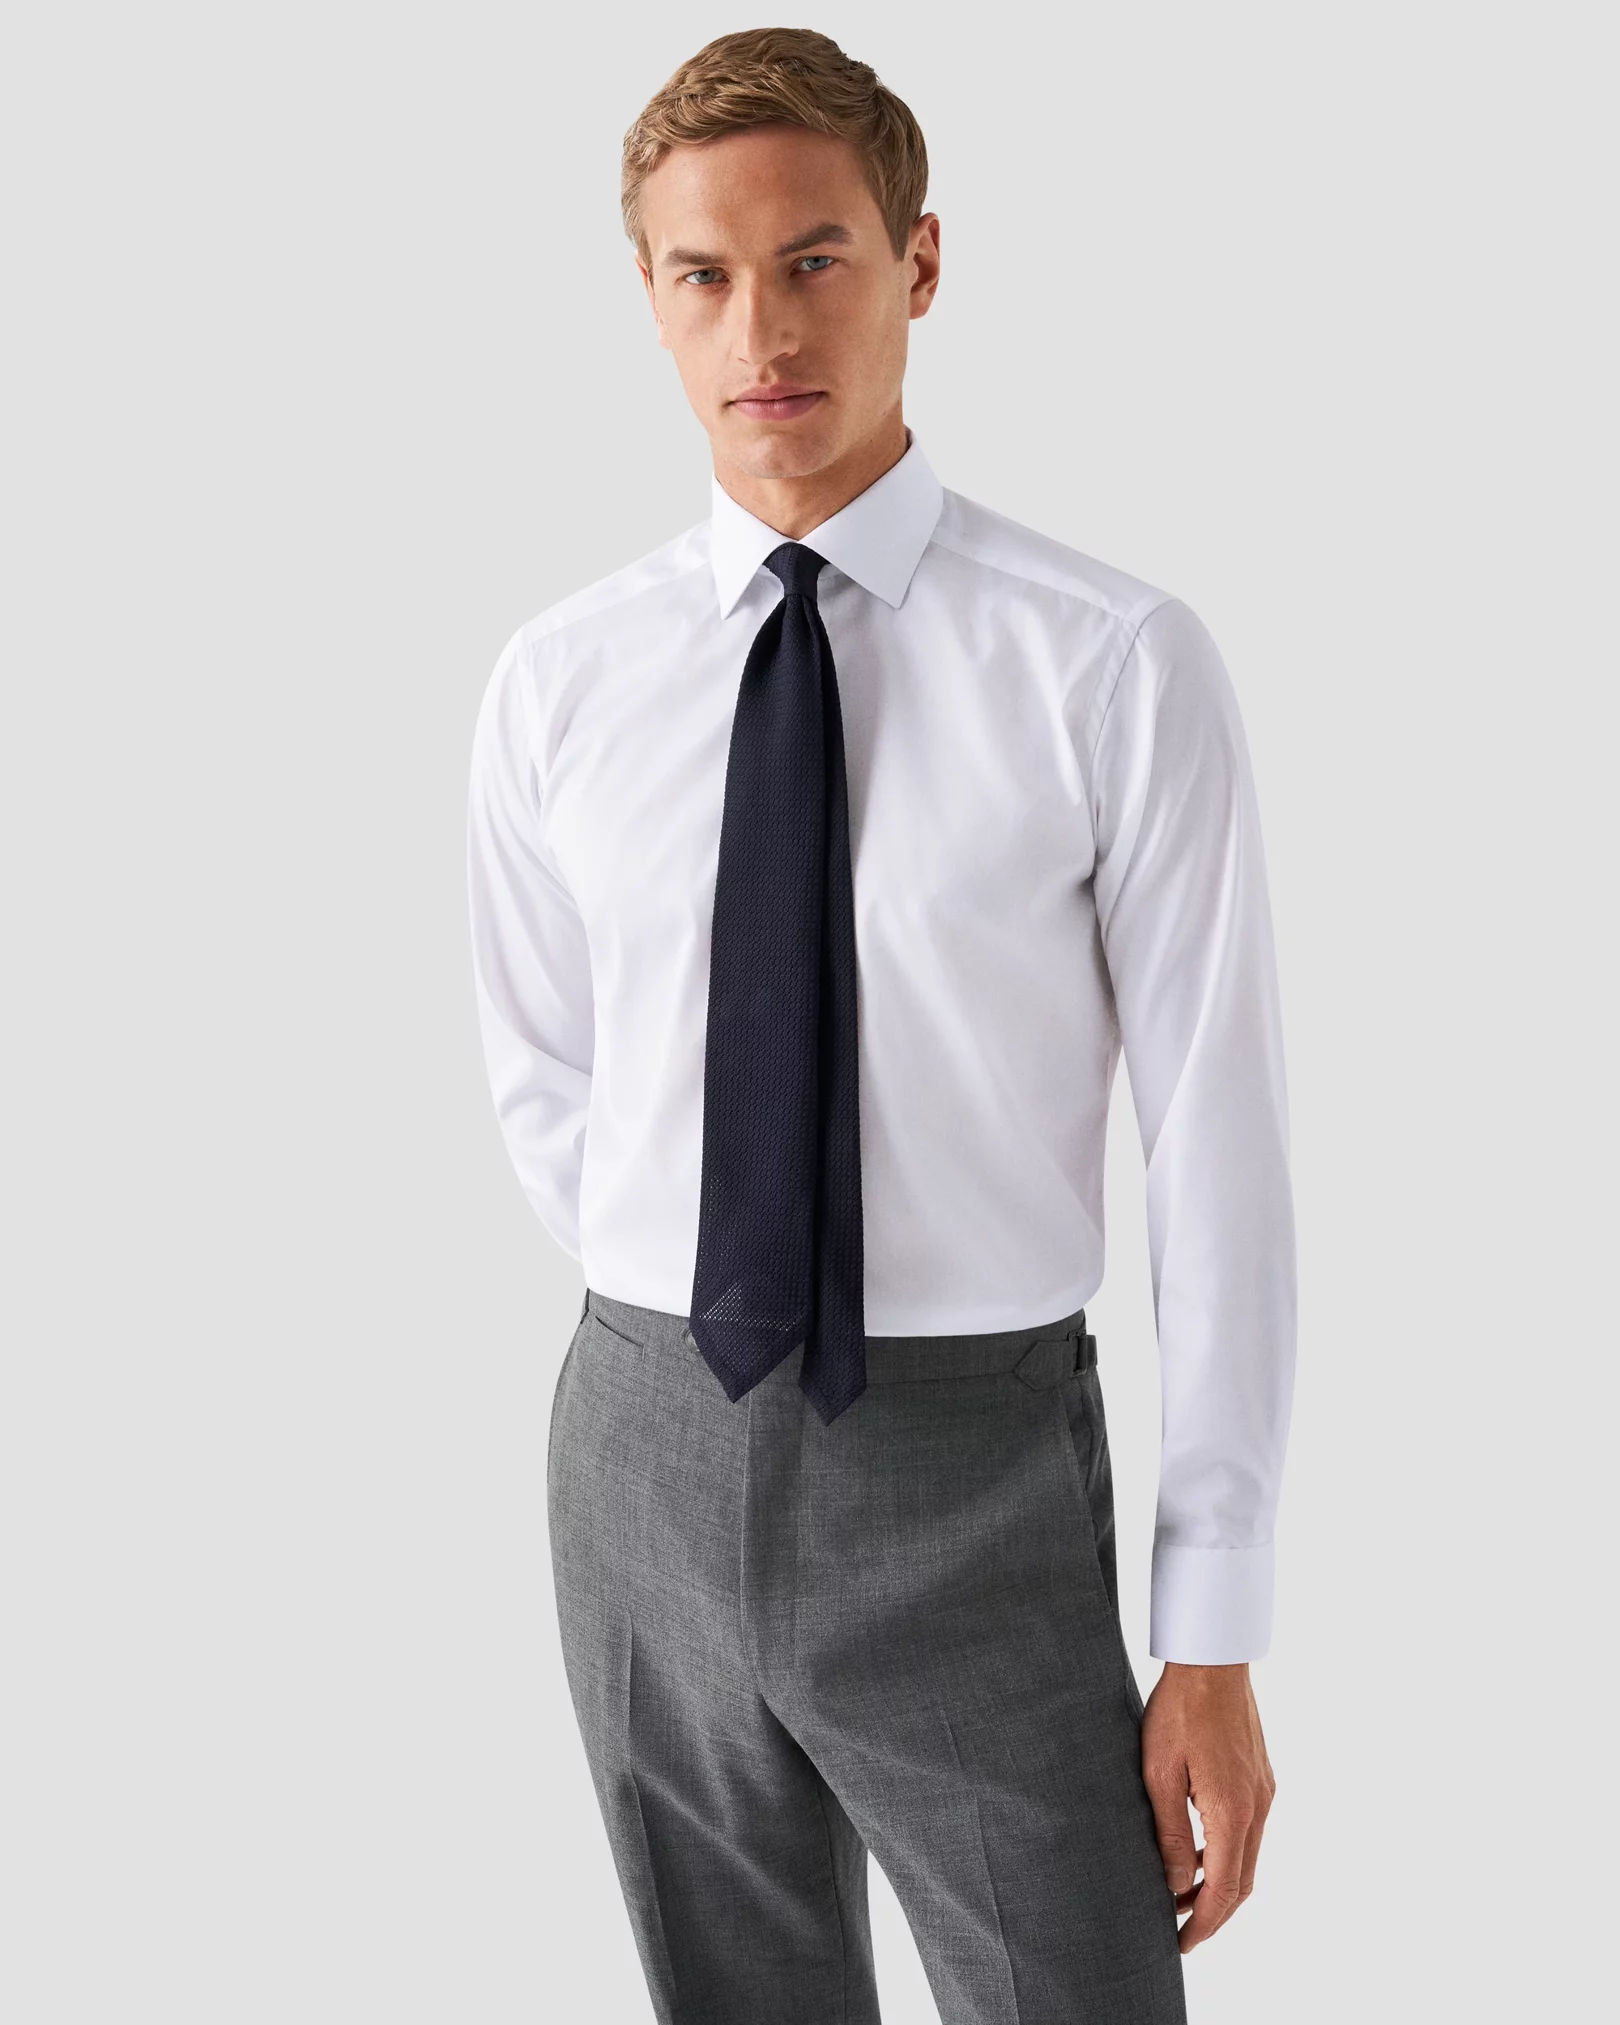 Eton - white twill shirt with grey details